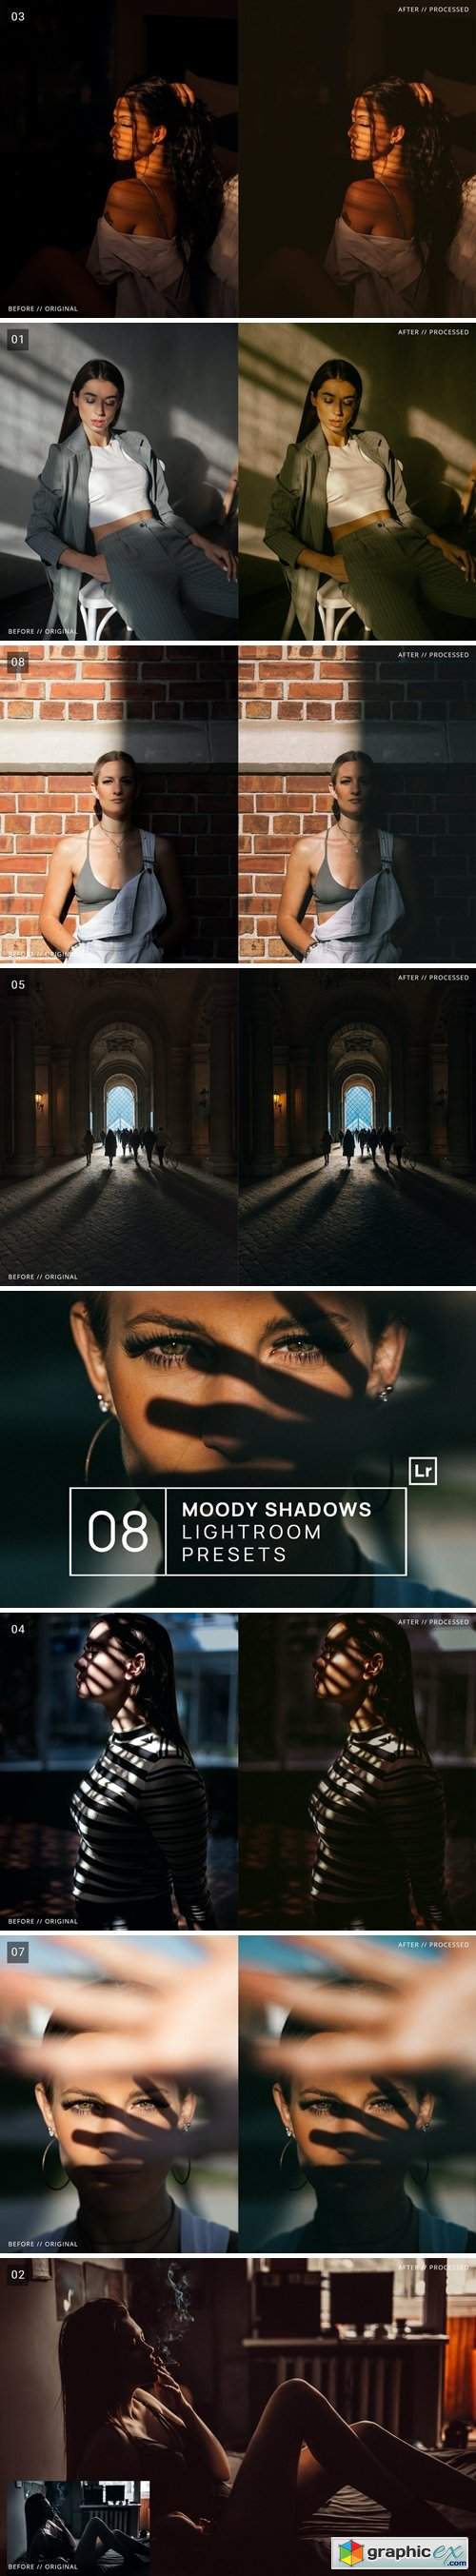  8 Moody Shadows Premium Lightroom Presets 